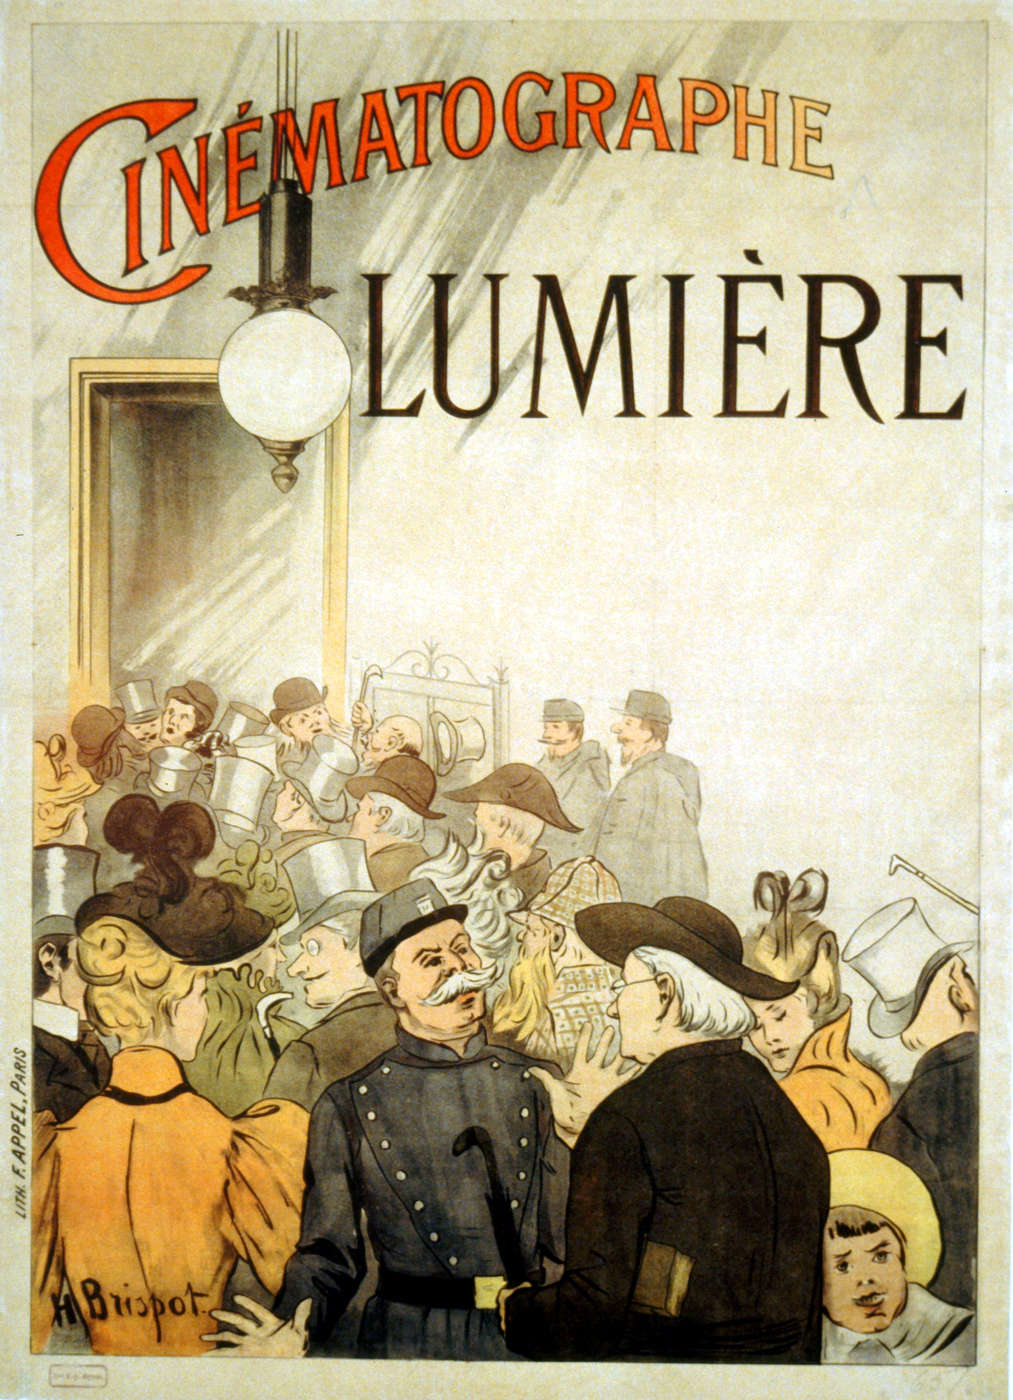 La nascita del Cinema: dai fratelli Lumière alle avanguardie